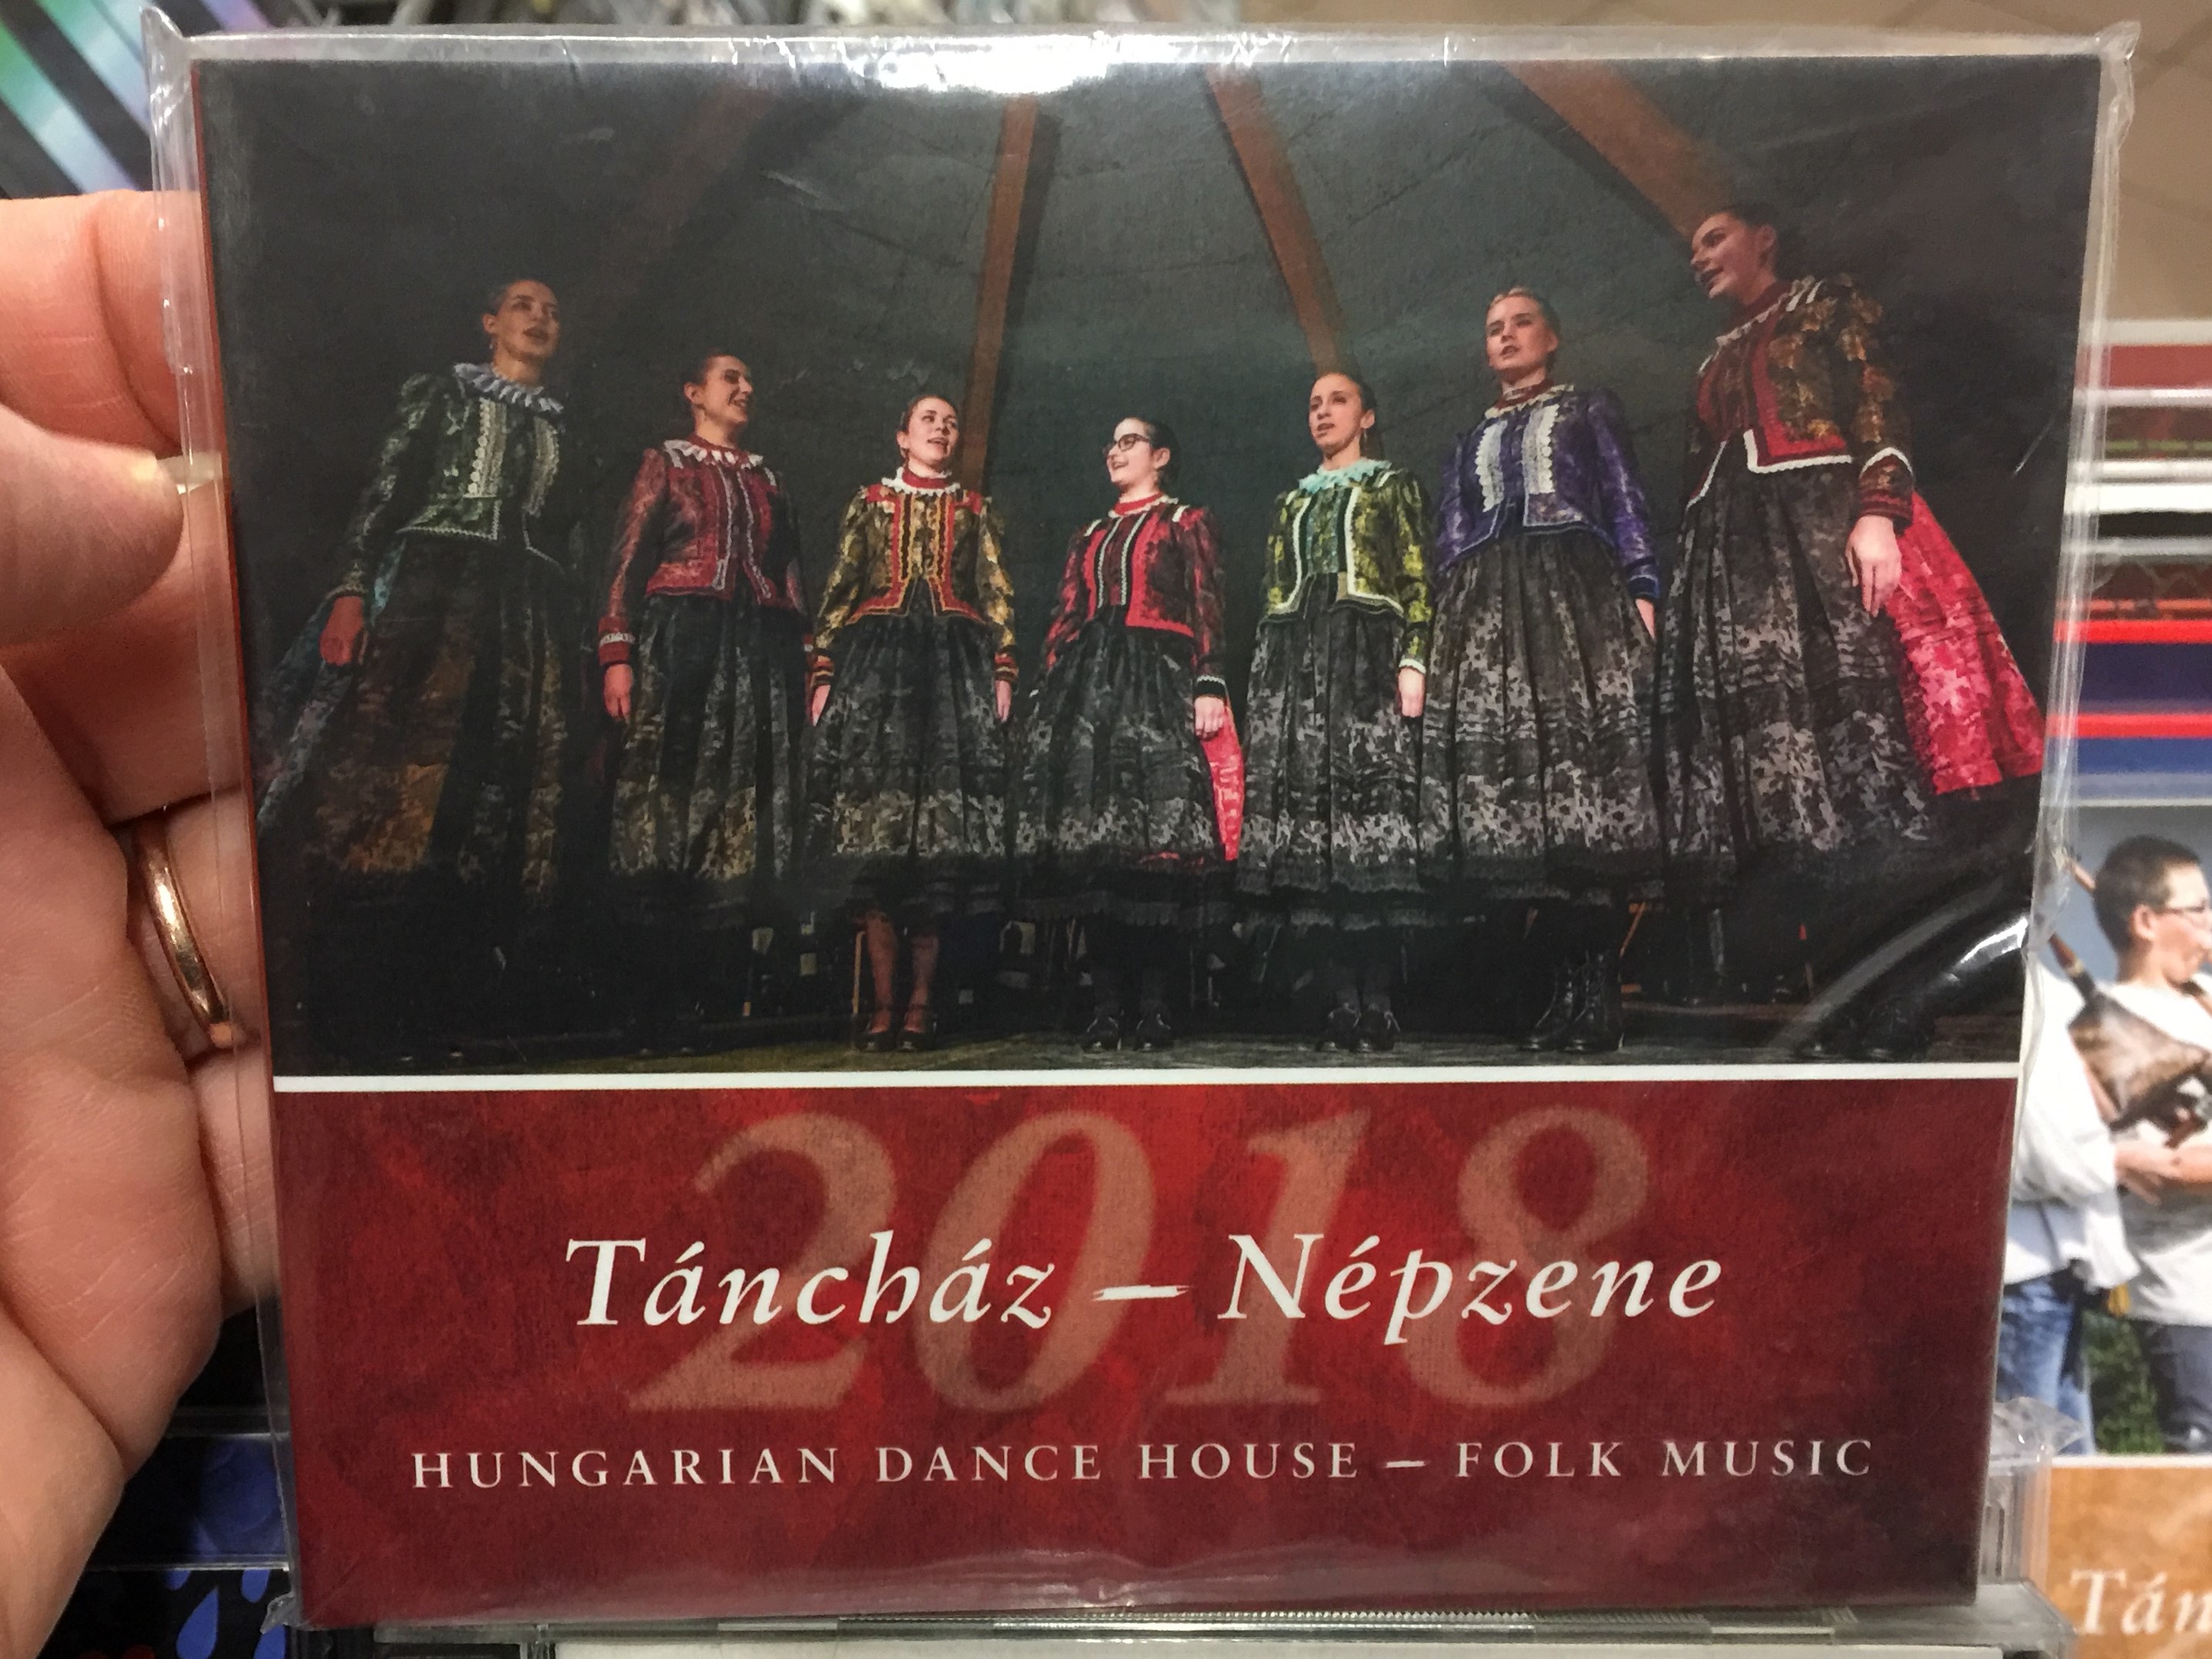 t-nch-z-n-pzene-2018-hungarian-dance-house-folk-music-hagyom-nyok-h-za-audio-cd-2018-hhcd-0117-1-.jpg